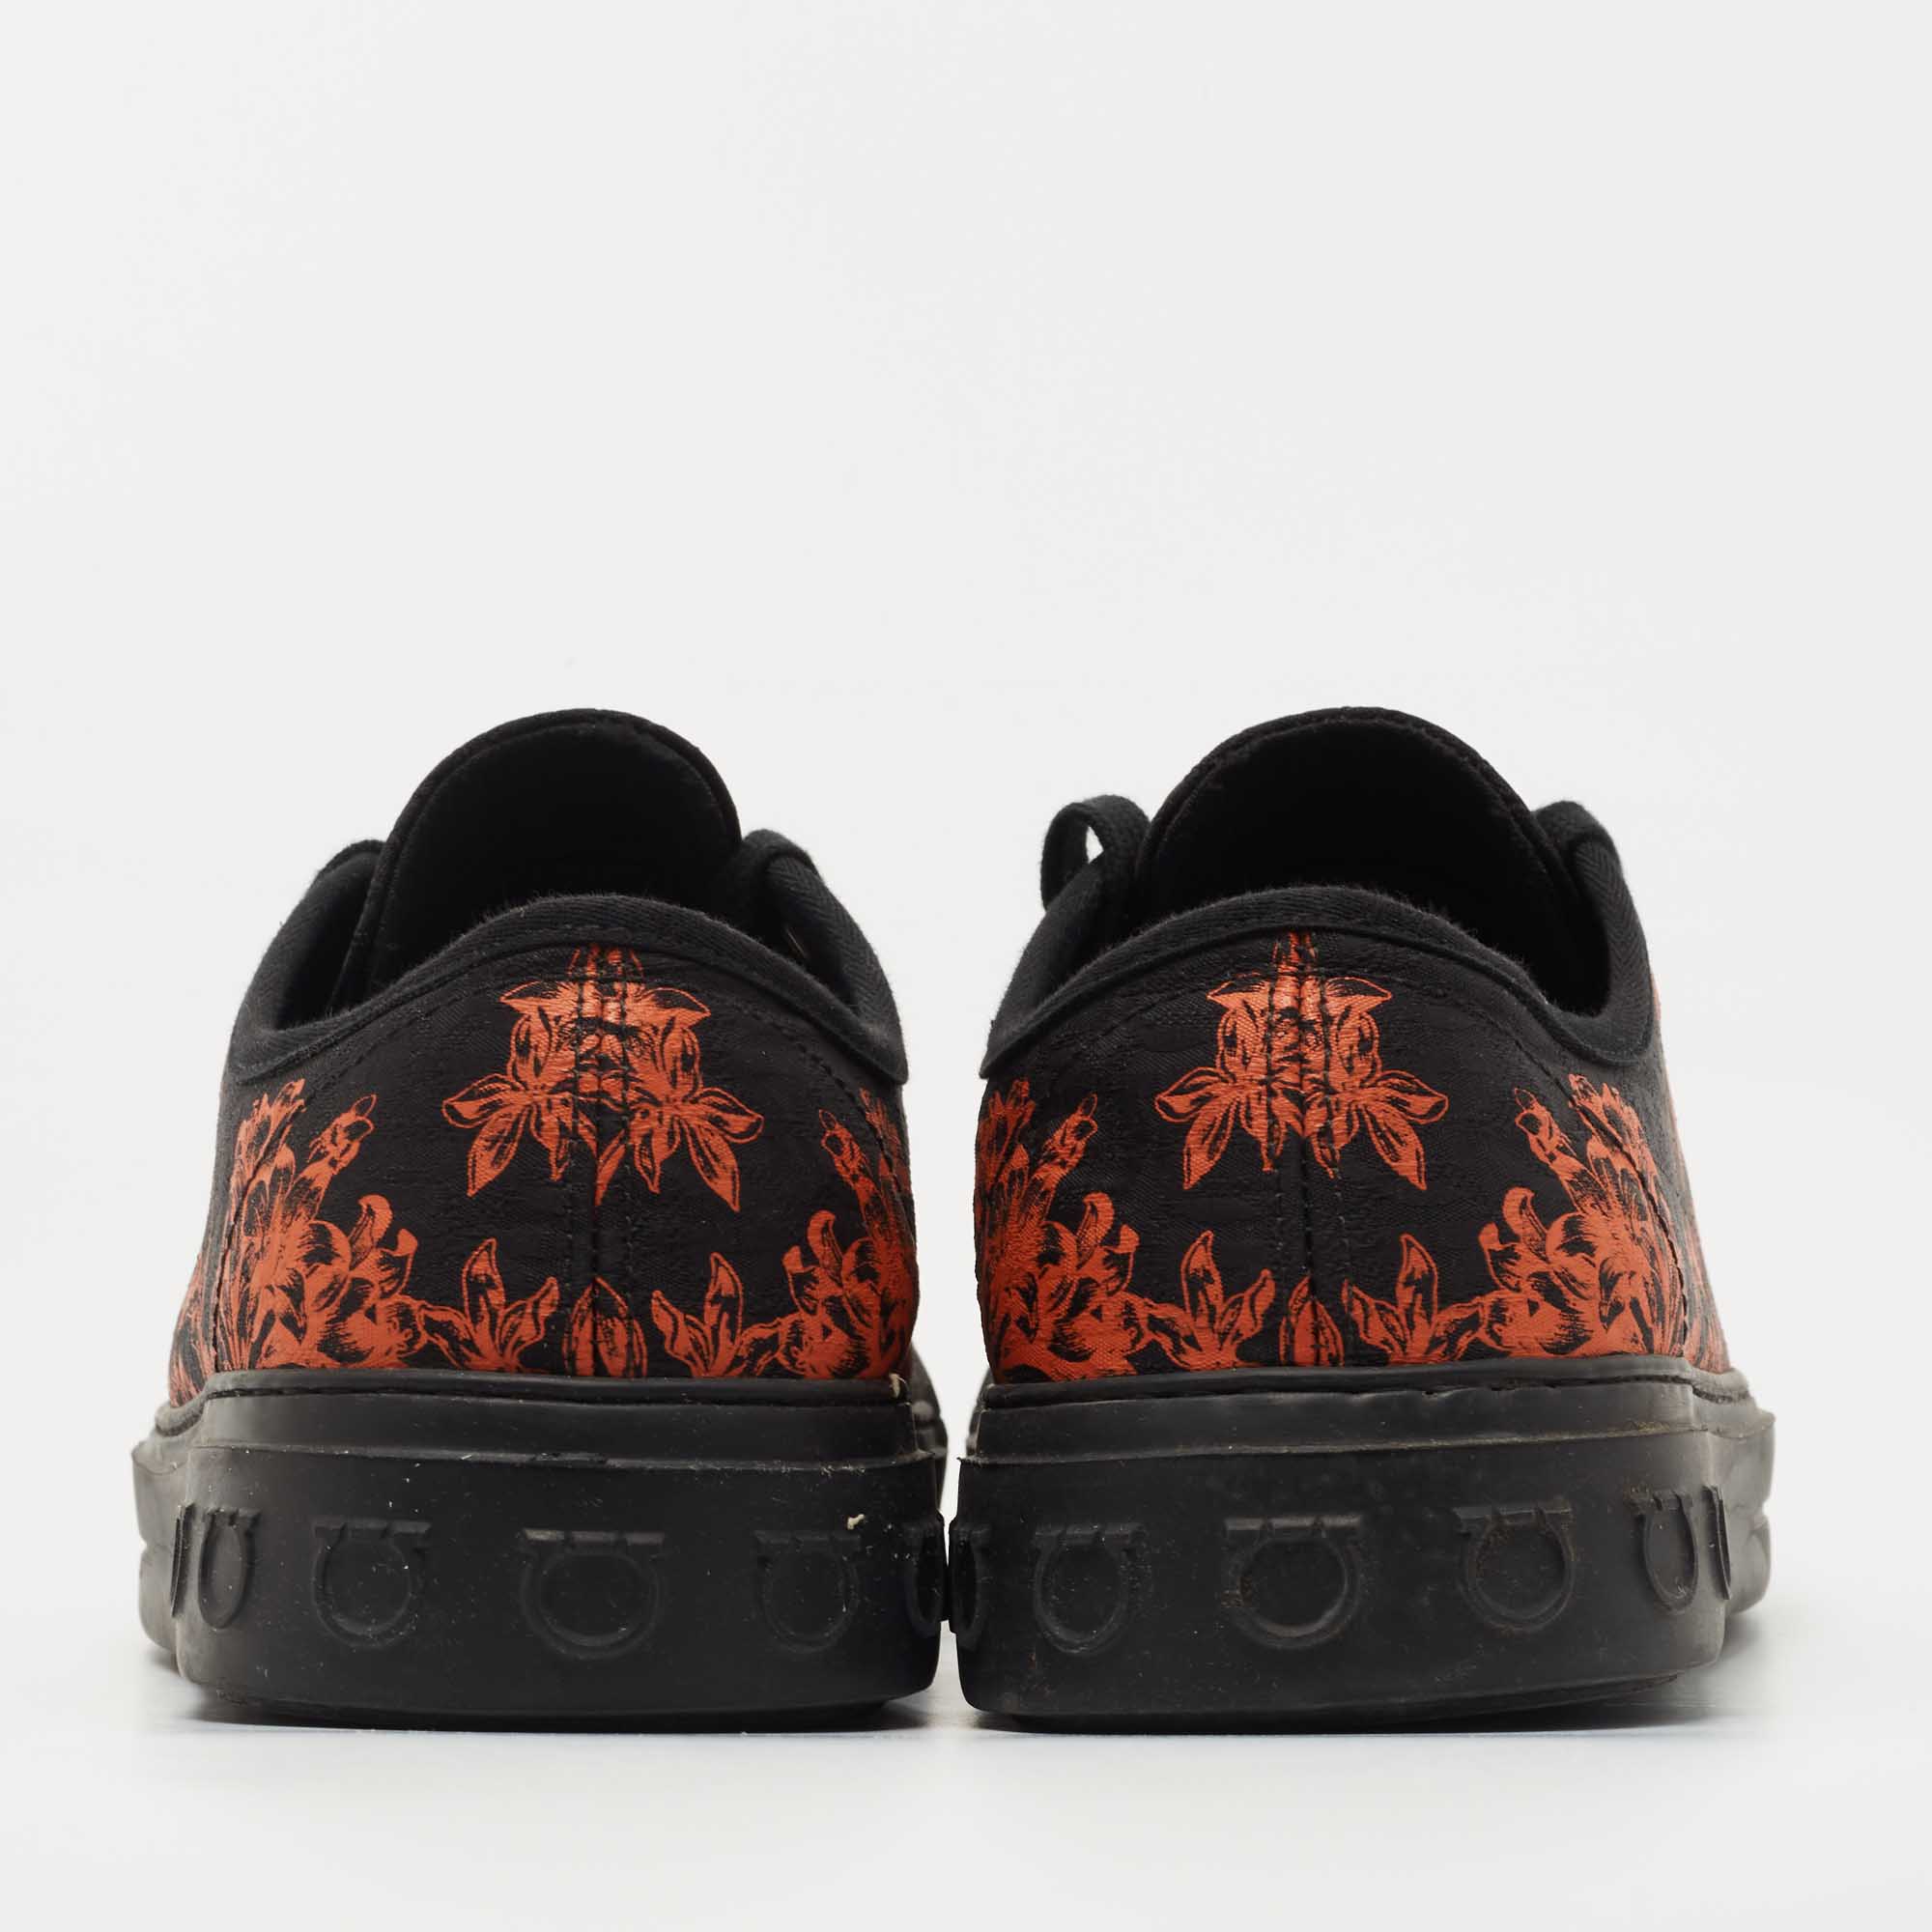 Salvatore Ferragamo Black/Red Brocade Fabric Rebel Printed Low Top Sneakers Size 42.5